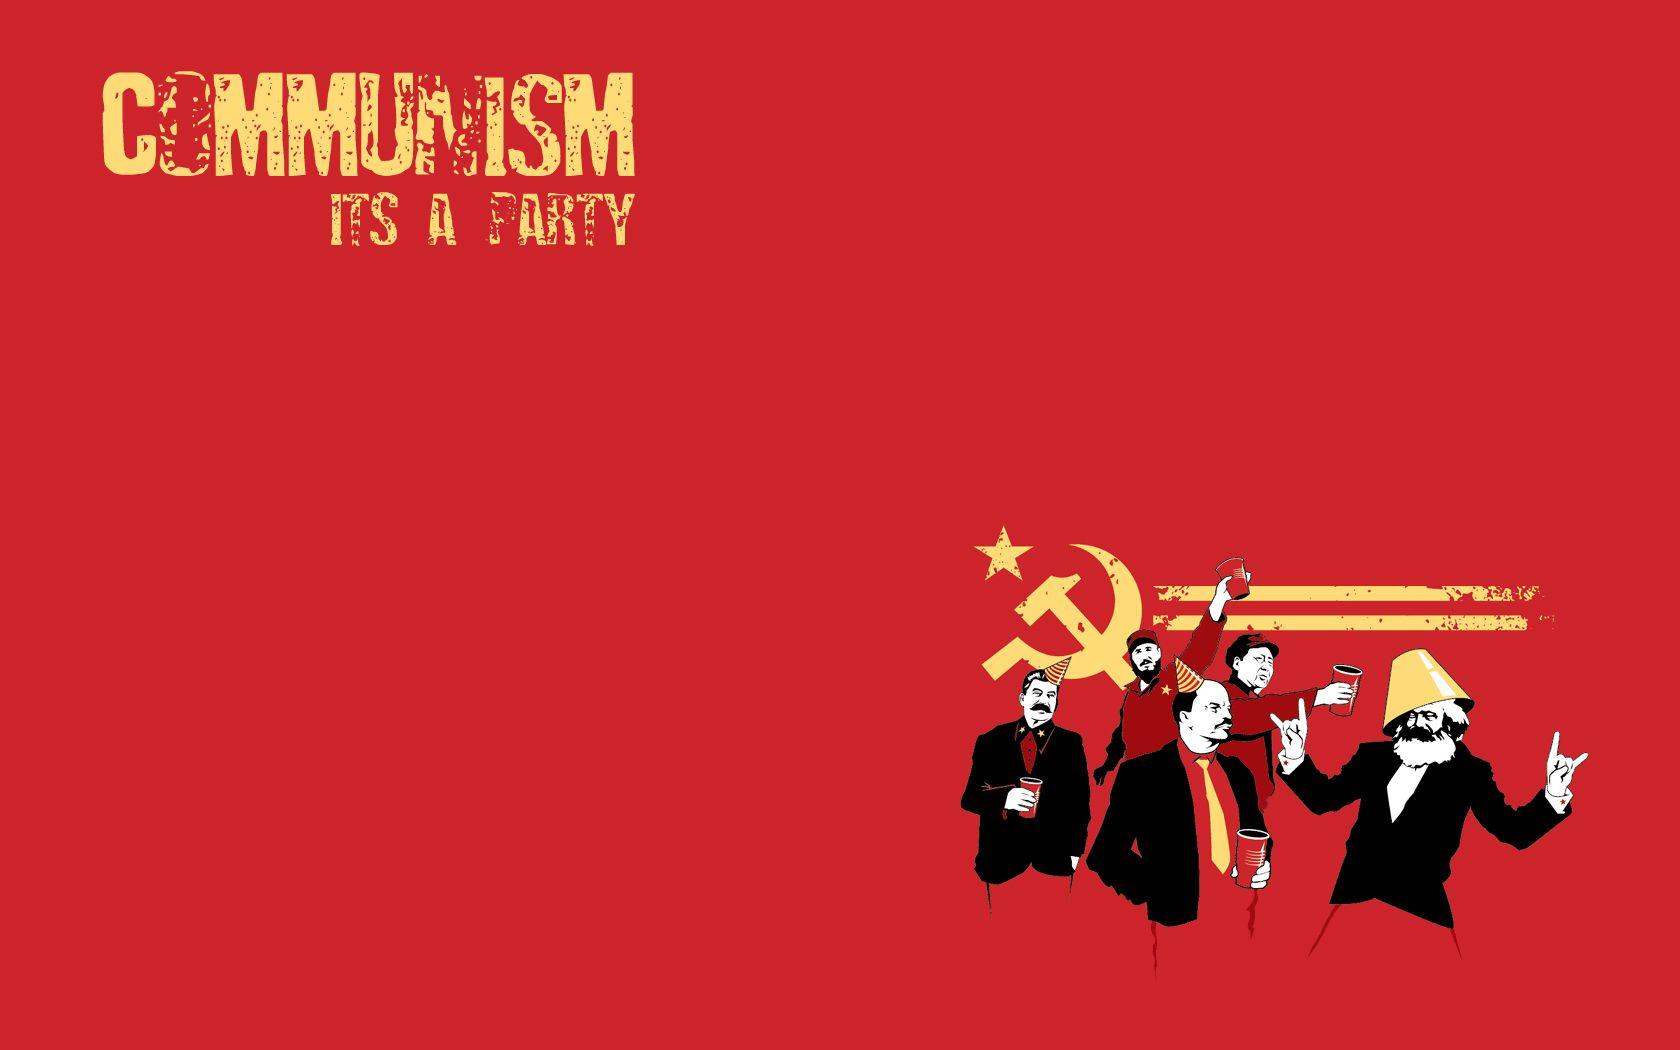 Ain't no party like a Communist party 'cos a communist